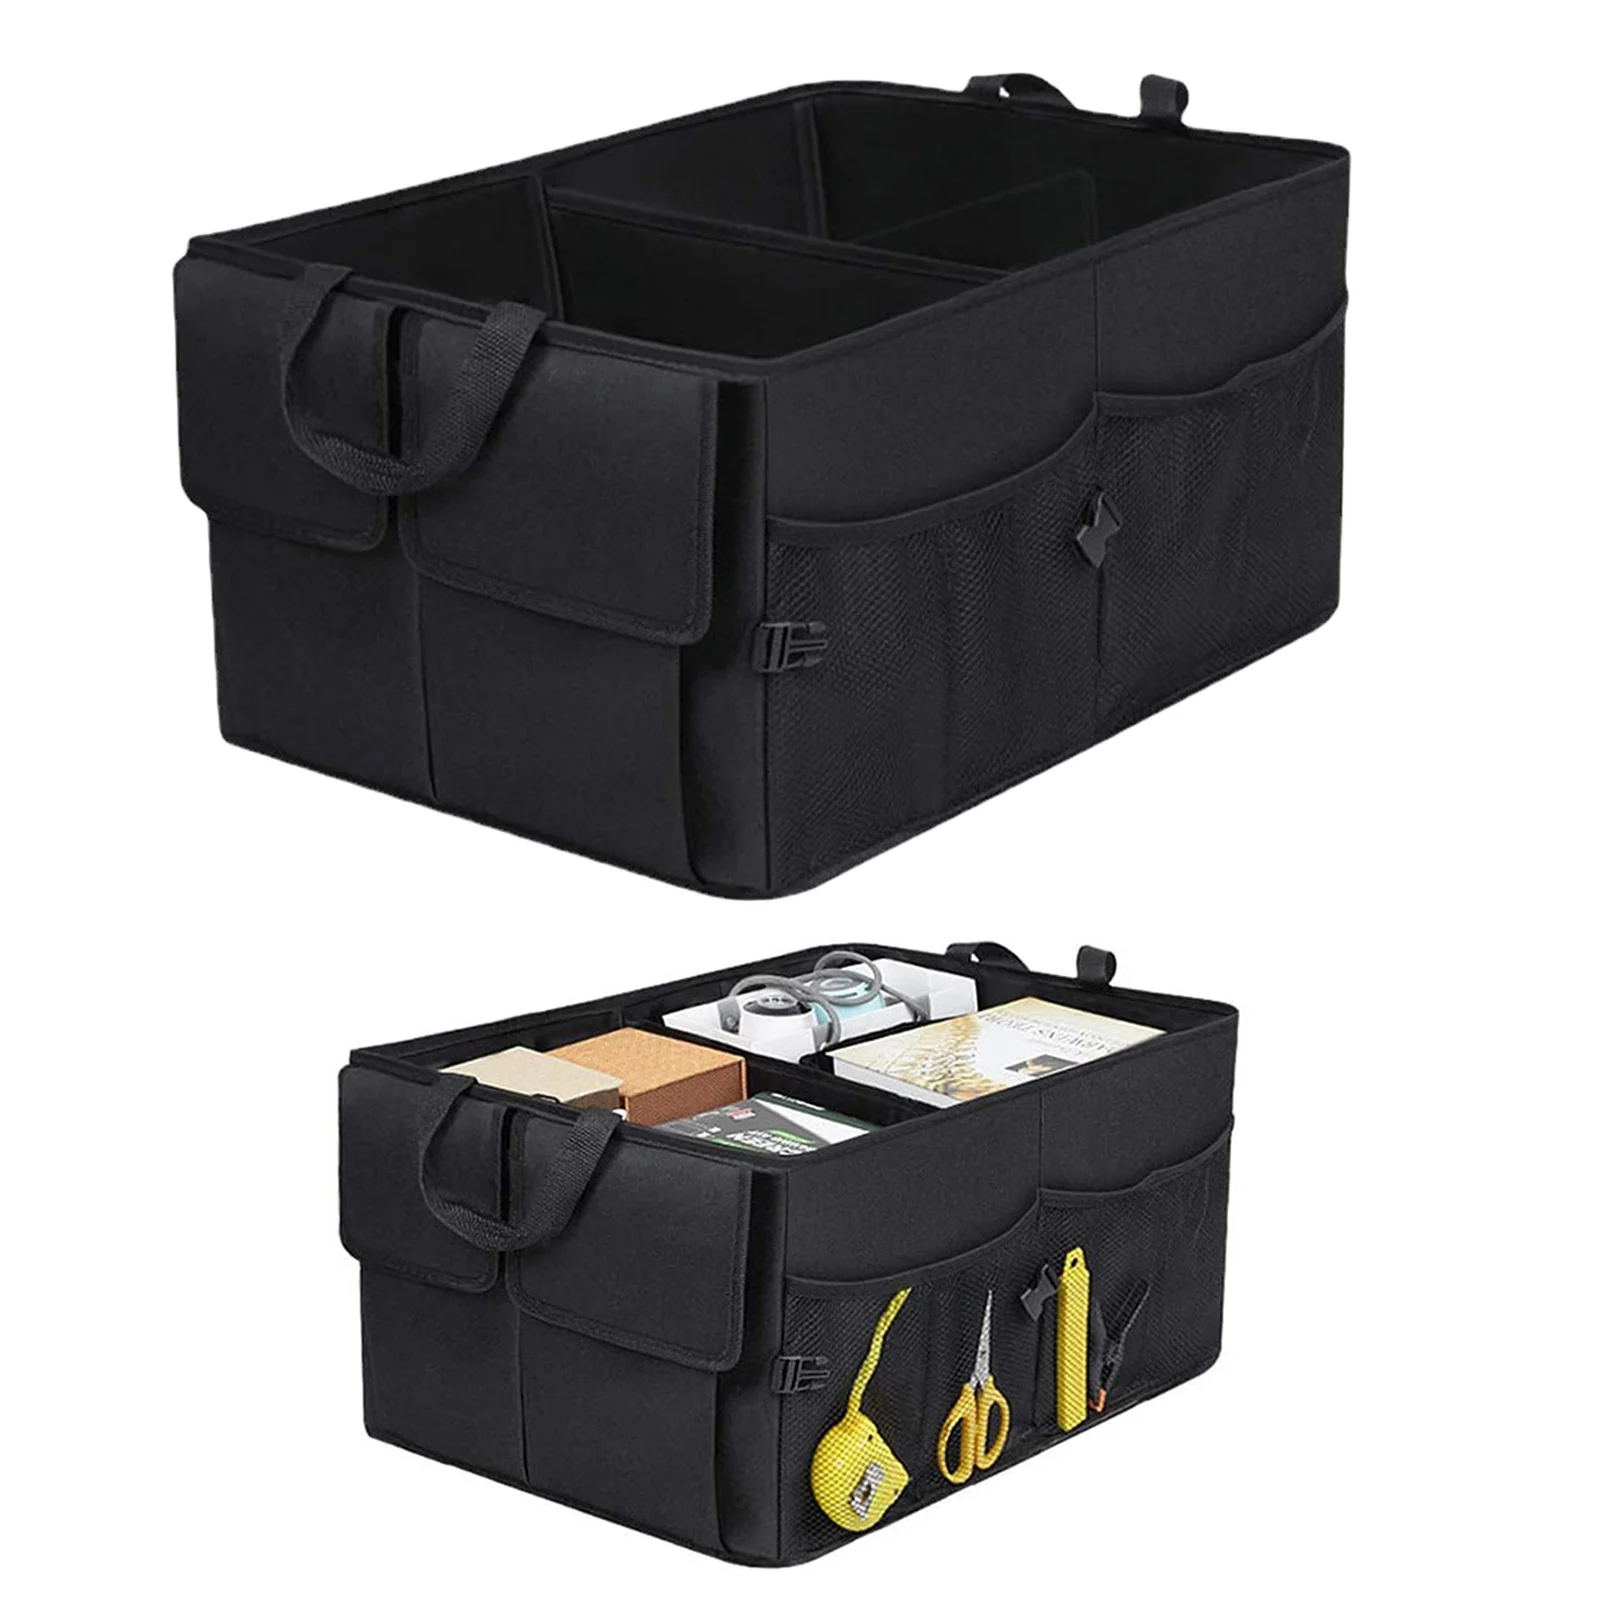 MagiDeal Car Boot Organizer Foldable Storage Bag Car Trunk Organizer for Tidy Auto Organization & Boot Maintenance 